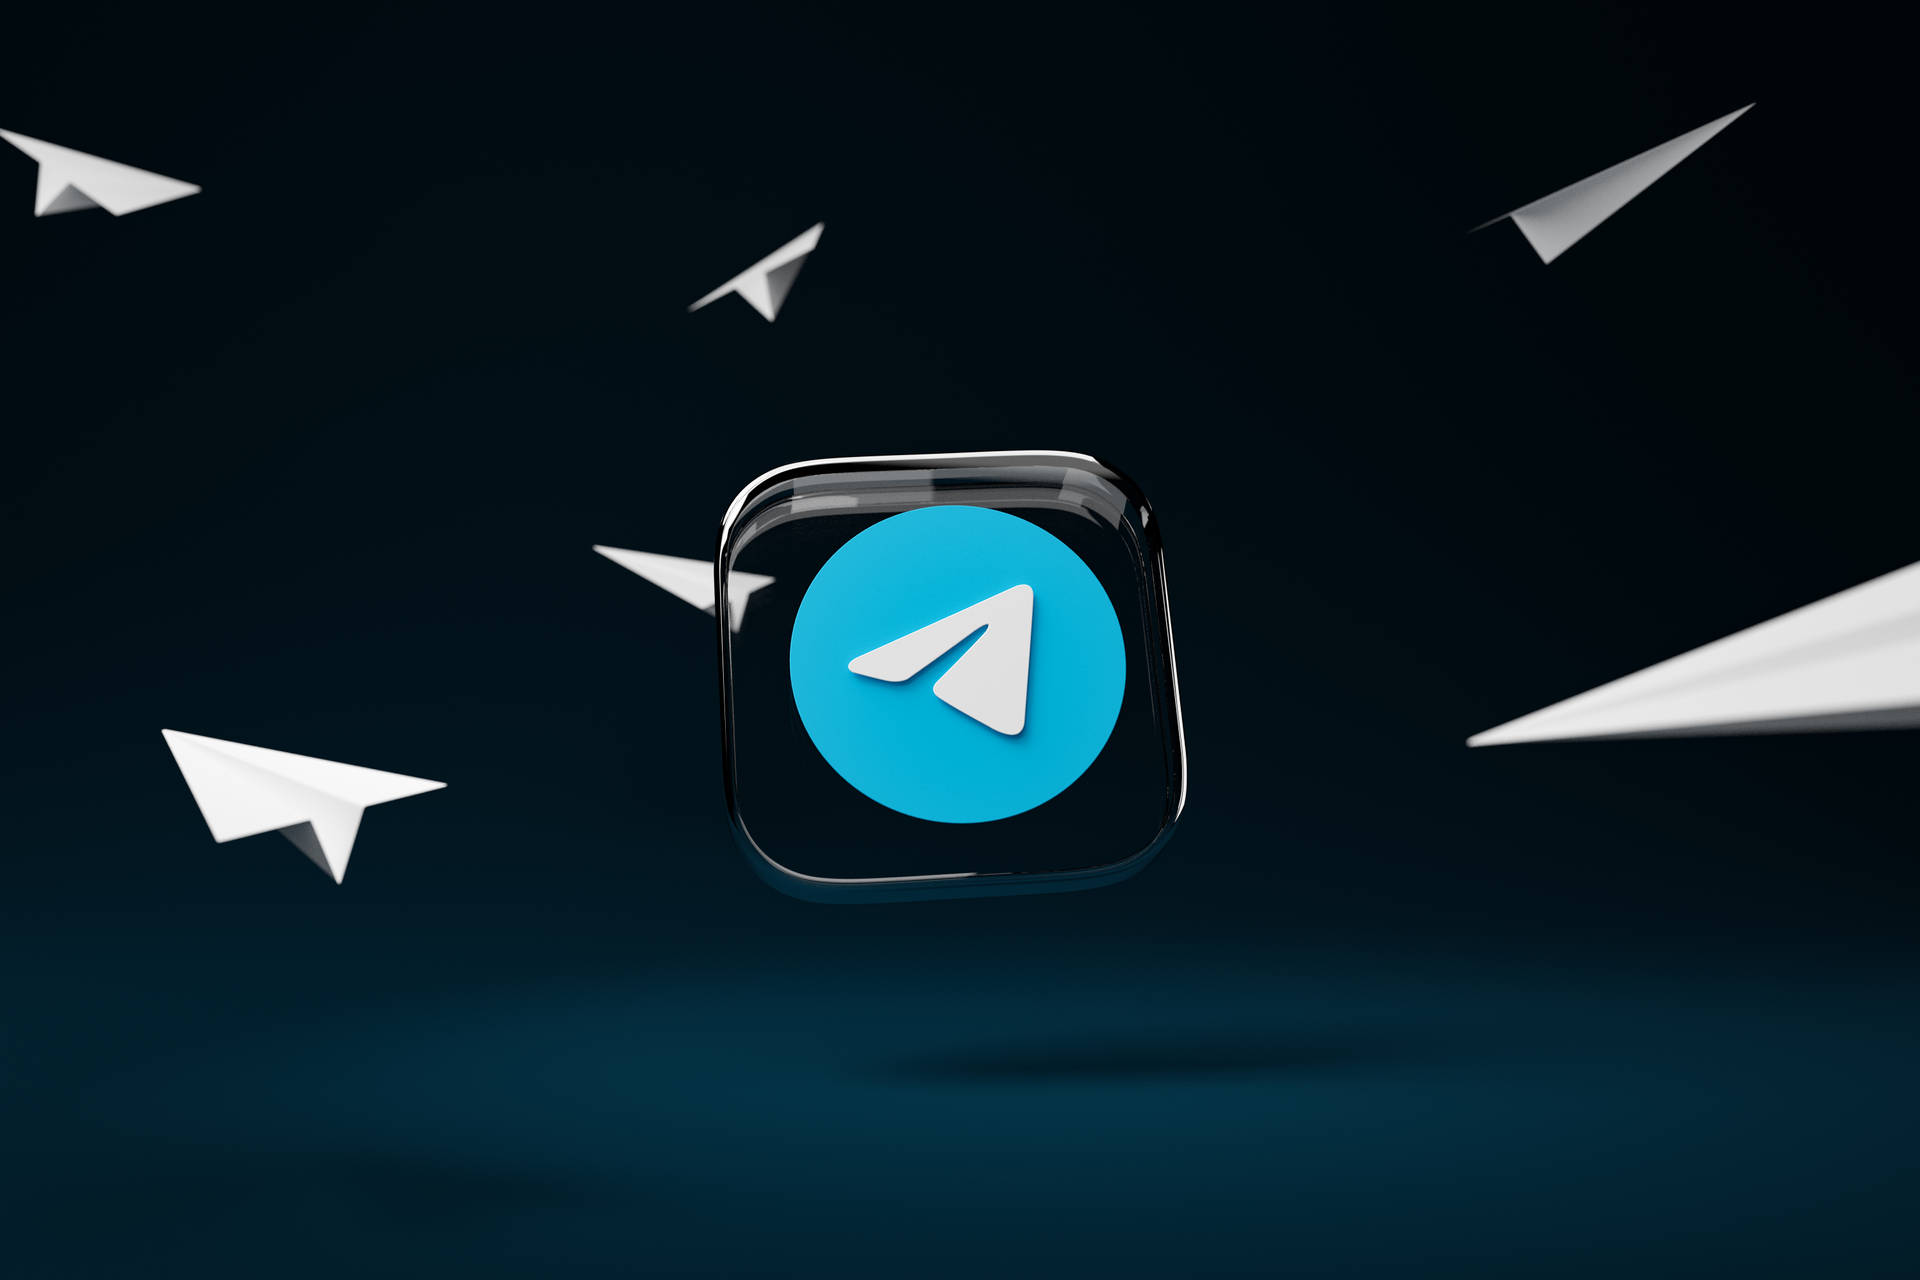 Logotipode Telegram Con Aviones De Papel Voladores. Fondo de pantalla